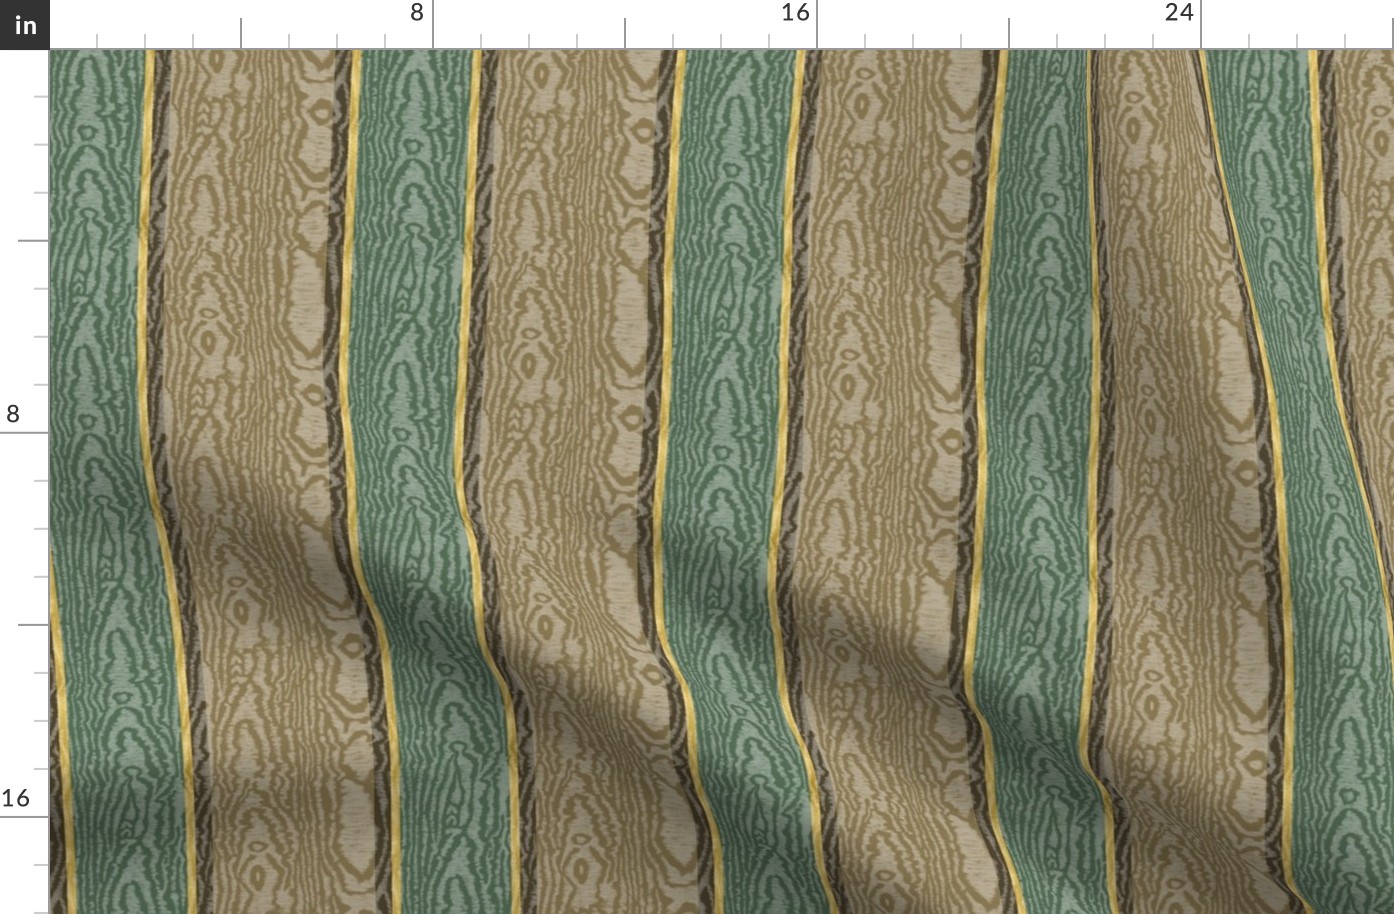 Moire Stripes (Medium) - Brown, Dark Green and Gold Foil   (TBS101)